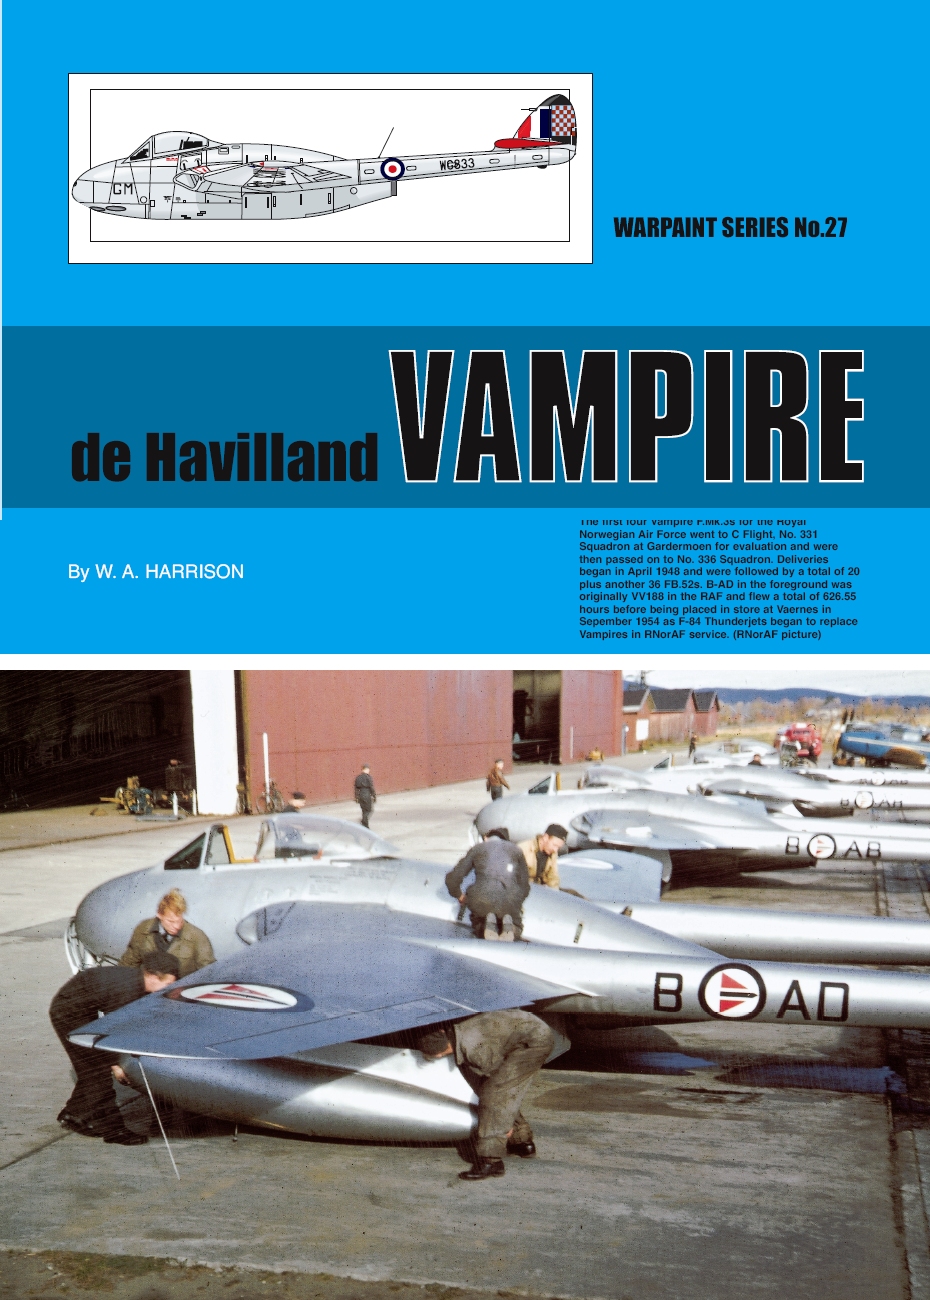 Guideline Publications Ltd No 27 de Havilland Vampire 2013 re-release 